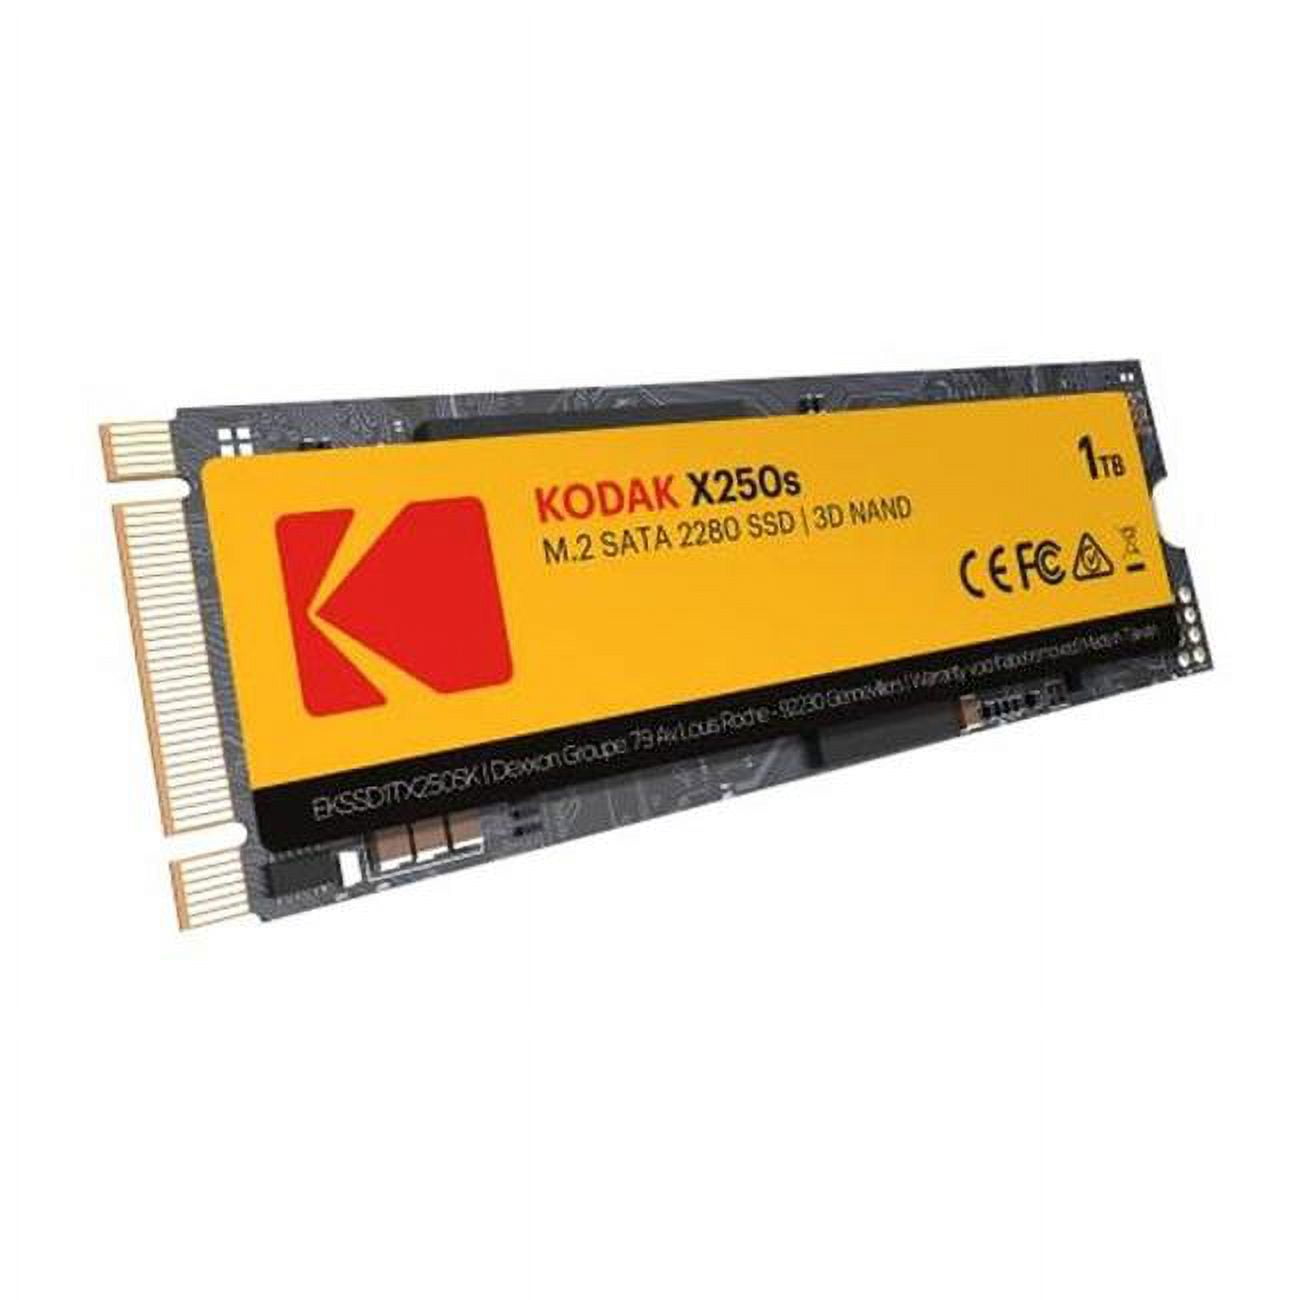 Picture of Kodak EKSSD1TX250SK M2 Sata X250 1TB Solid State Drive